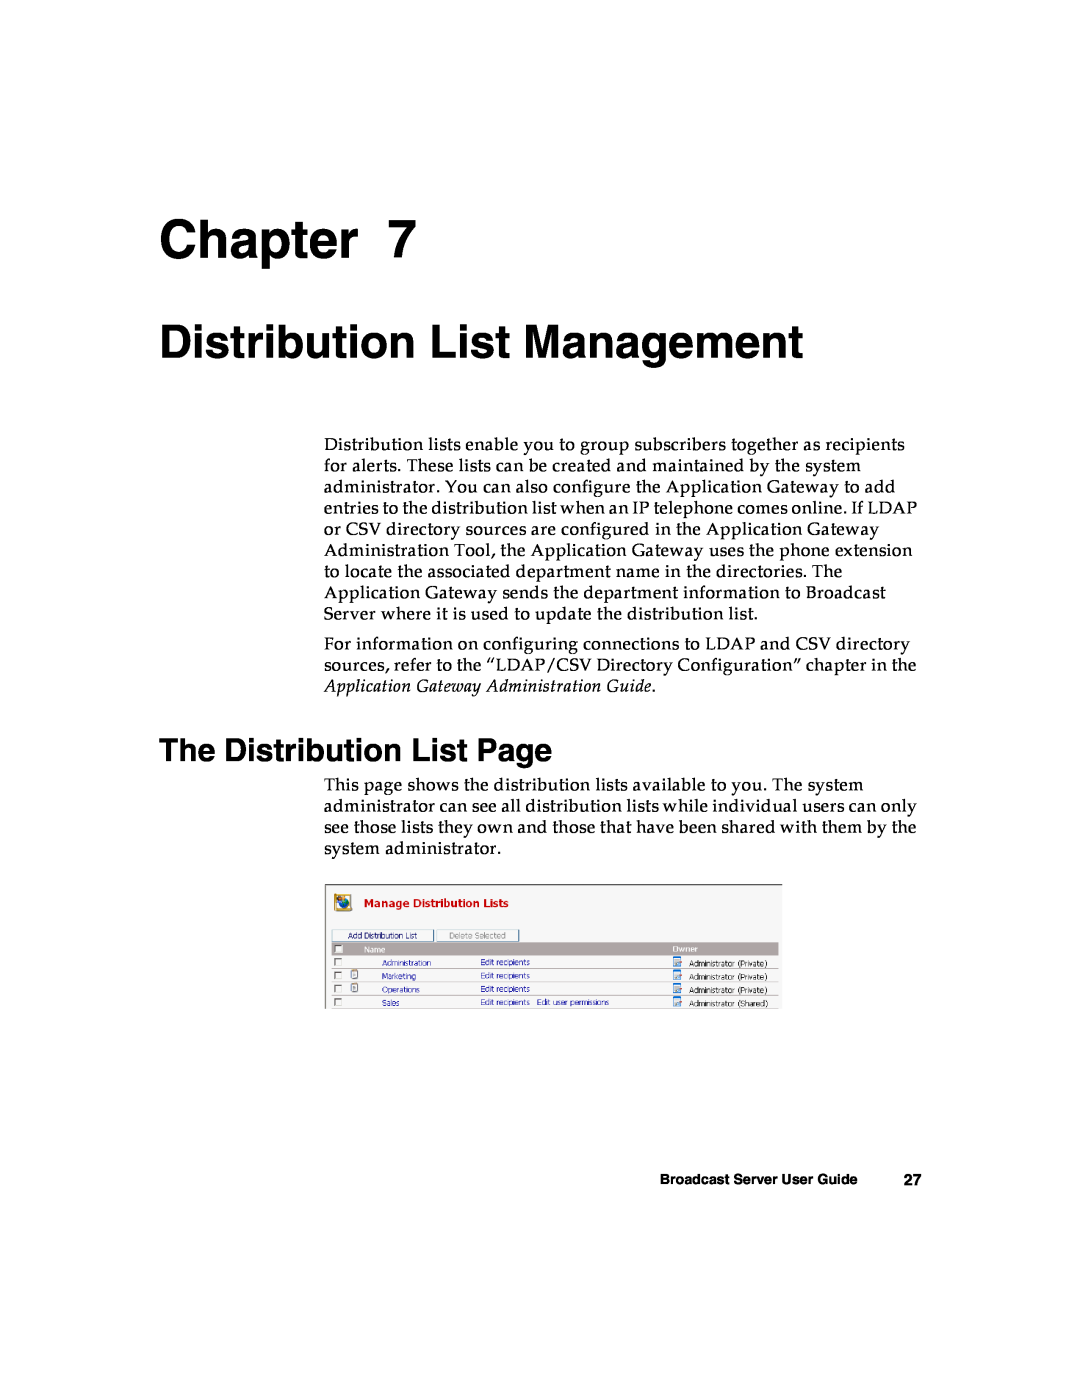 Nortel Networks Broadcast Server warranty Distribution List Management, The Distribution List Page, Chapter 